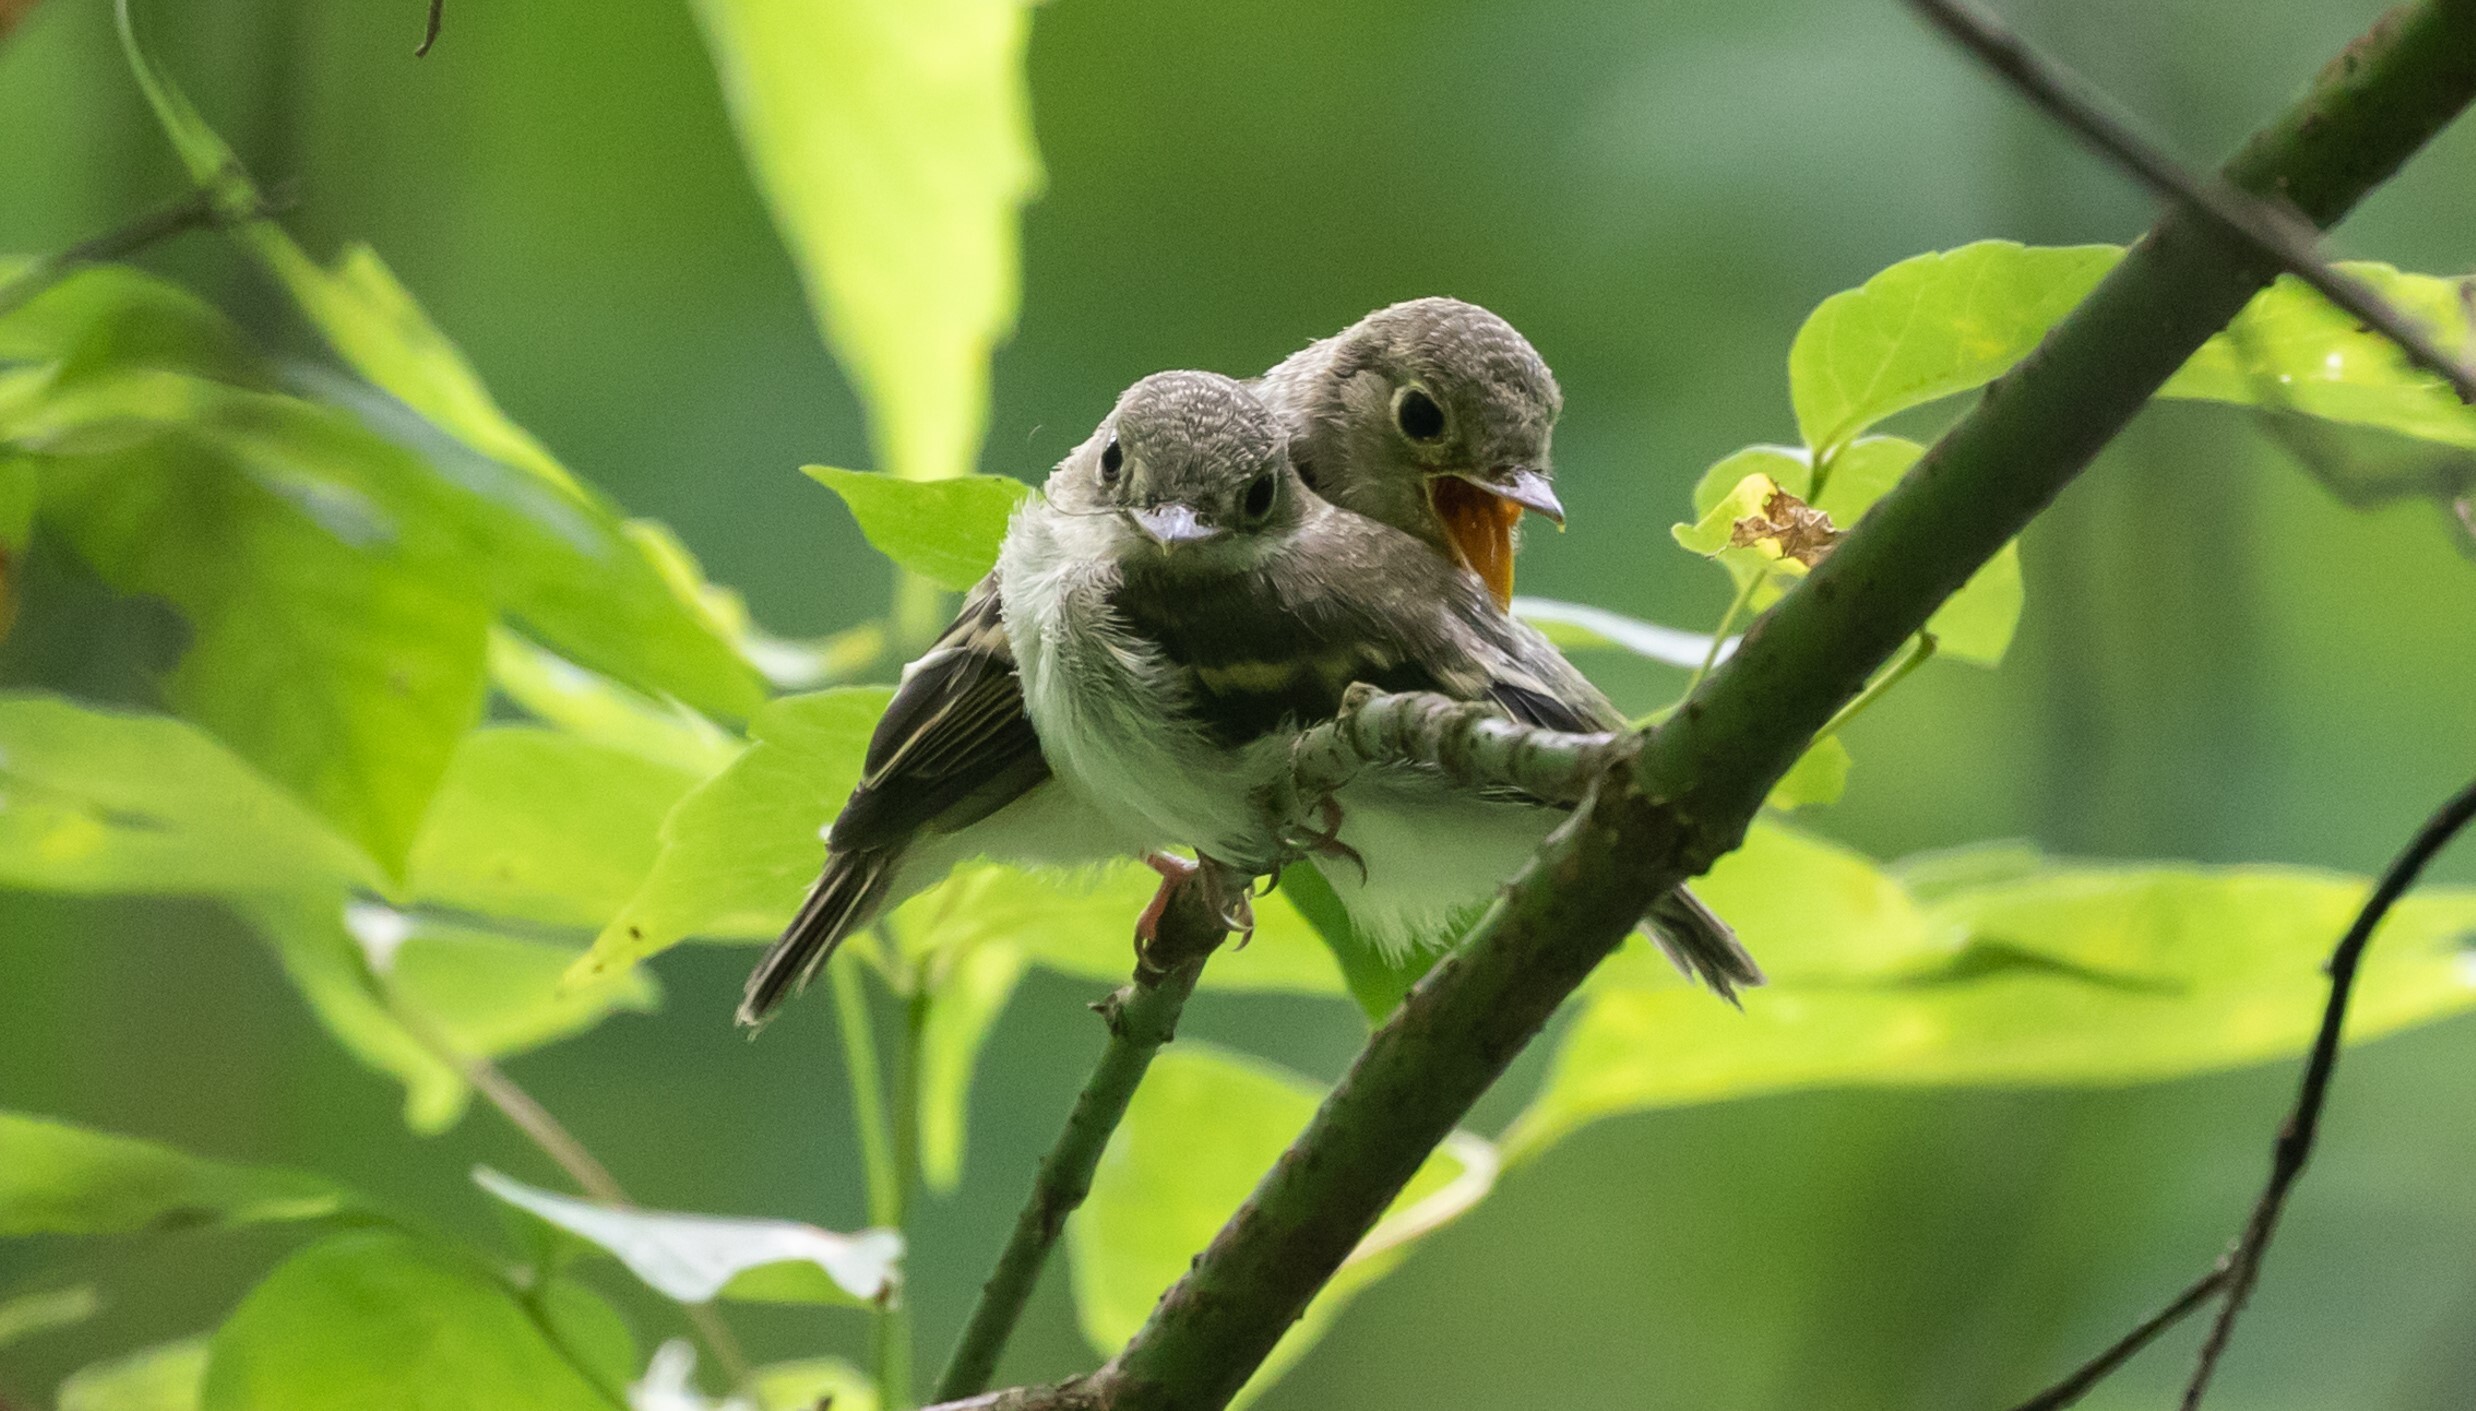 Acadian Flycatcher fledglings in Prospect Park. Photo: <a href="https://www.flickr.com/photos/144871758@N05/" target="_blank">Ryan F. Mandelbaum</a>